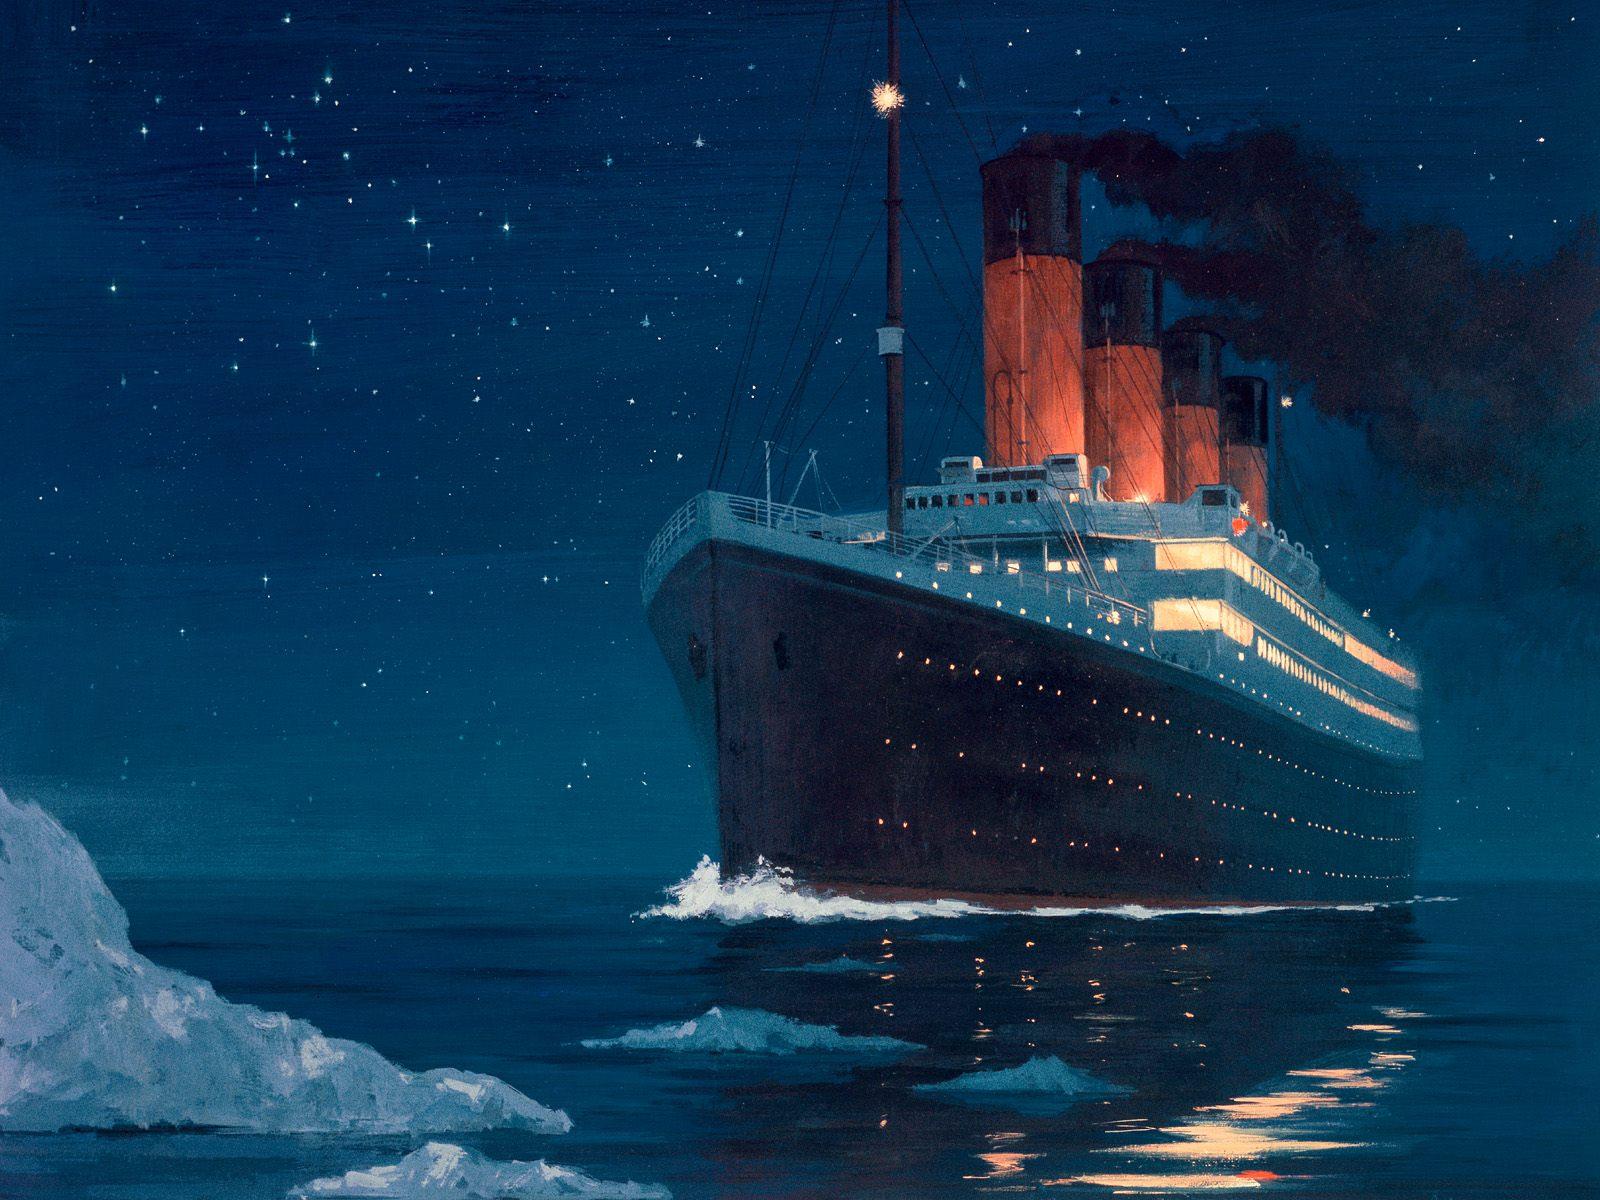 The Titanic artistic photo free desktop background